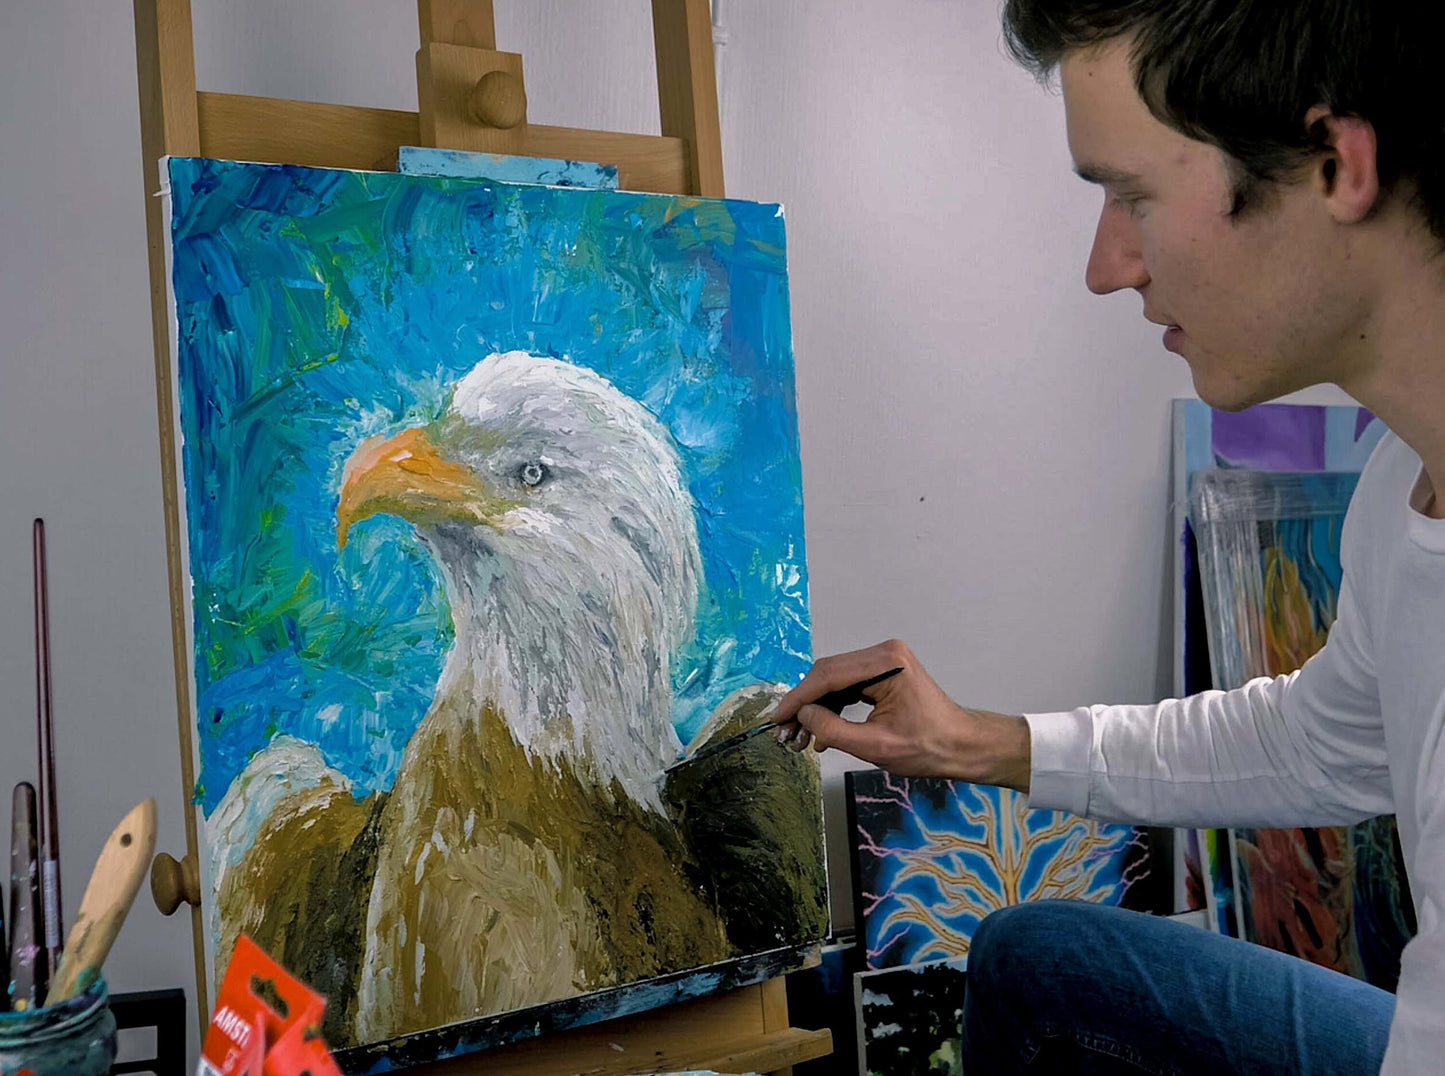 The Eagle | Canvas Print